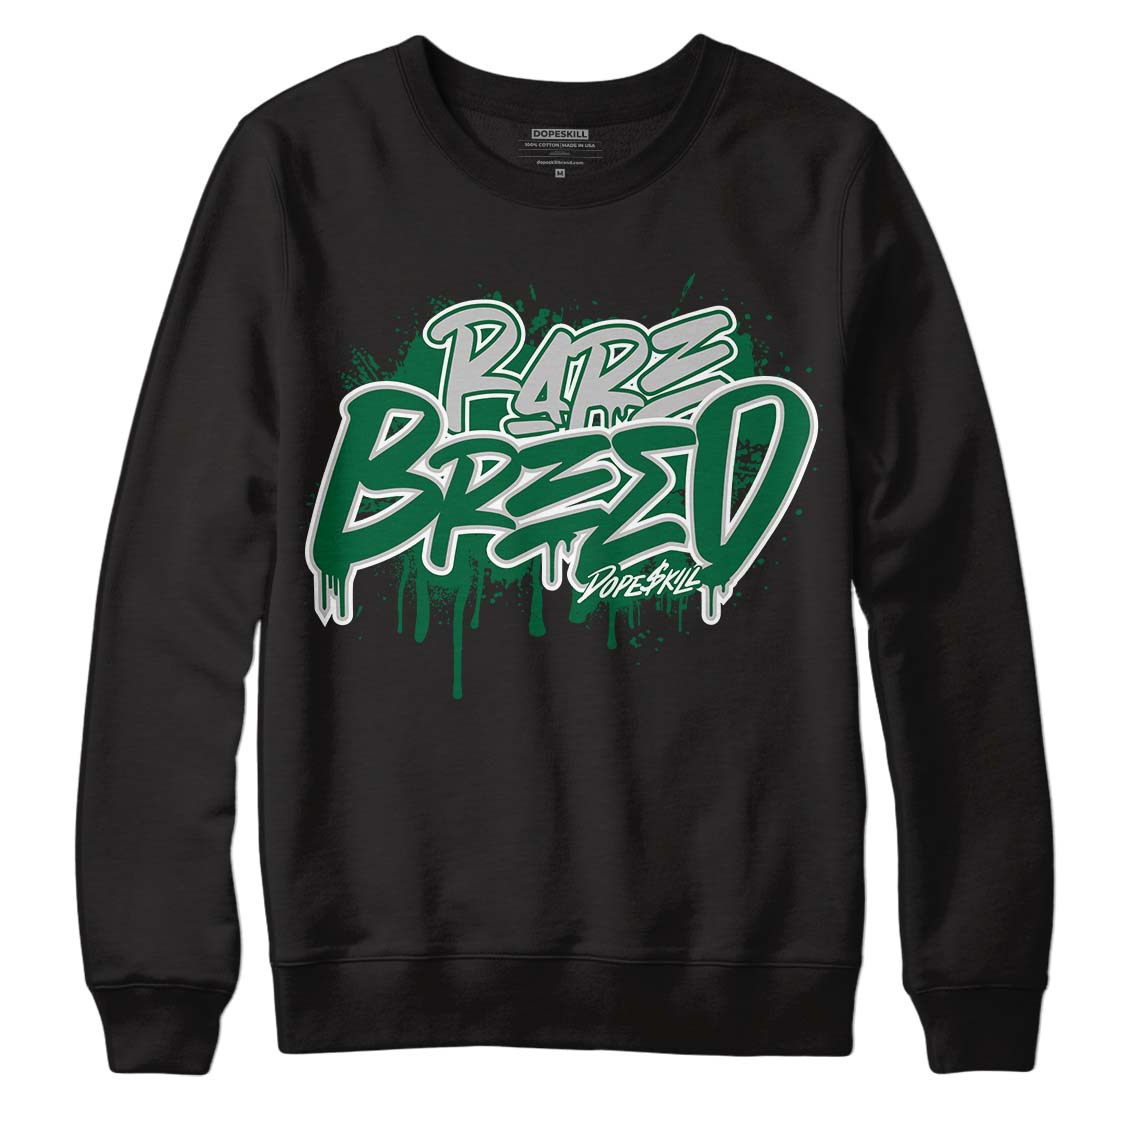 Gorge Green 1s DopeSkill Sweatshirt Rare Breed Graphic - Black 